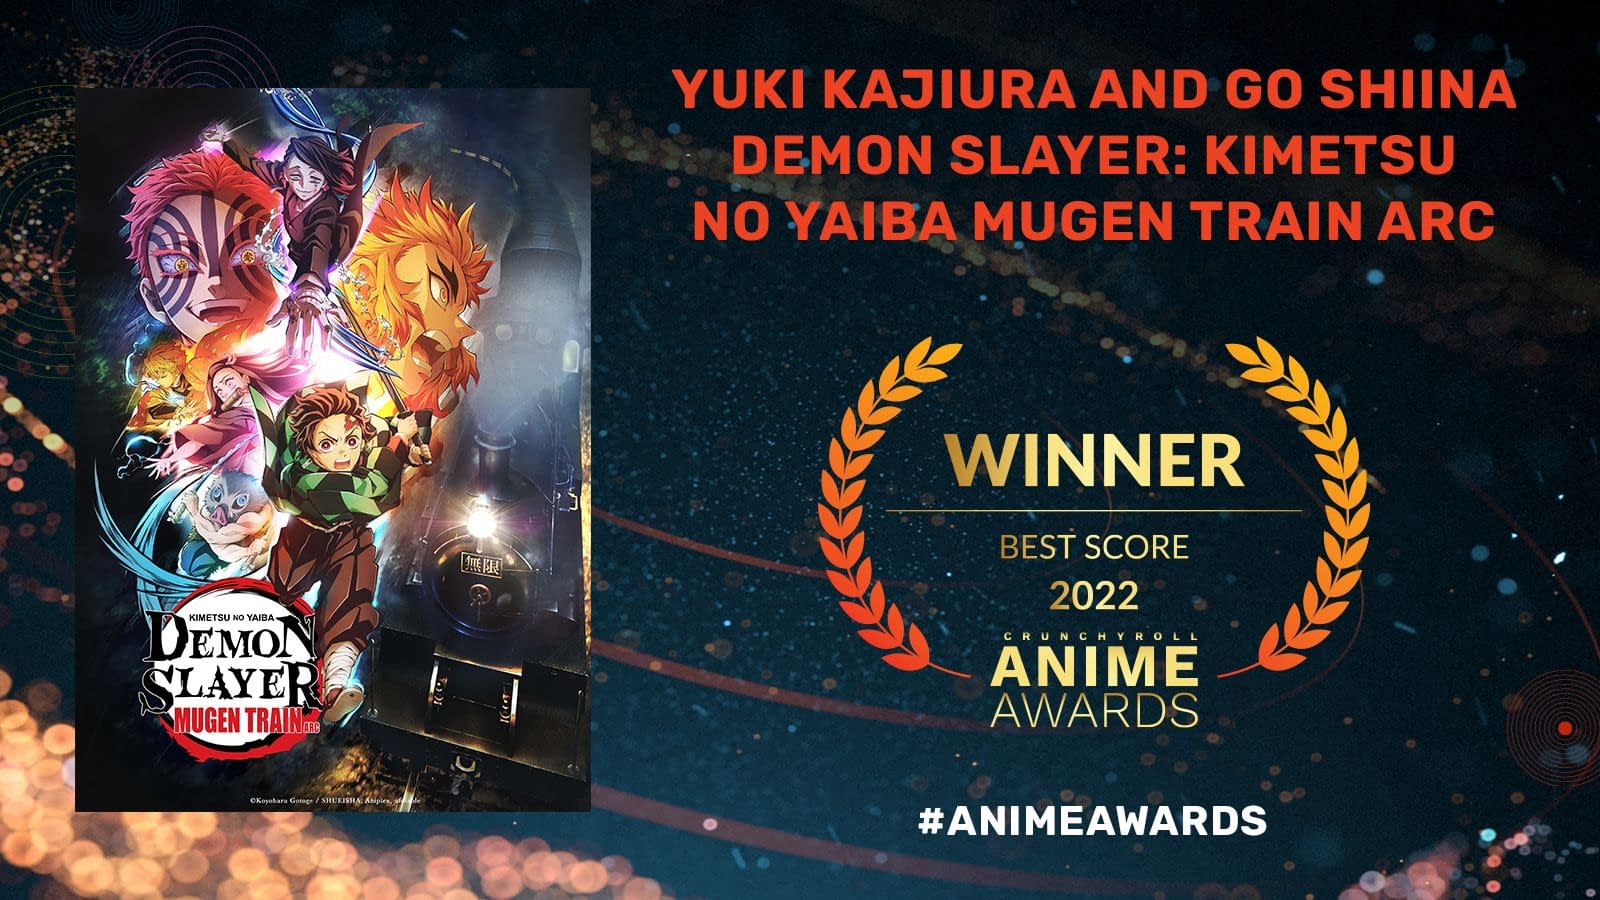 Crunchyroll Anime Awards 2022 Attack on Titan, Jujutsu Kaisen Win Big